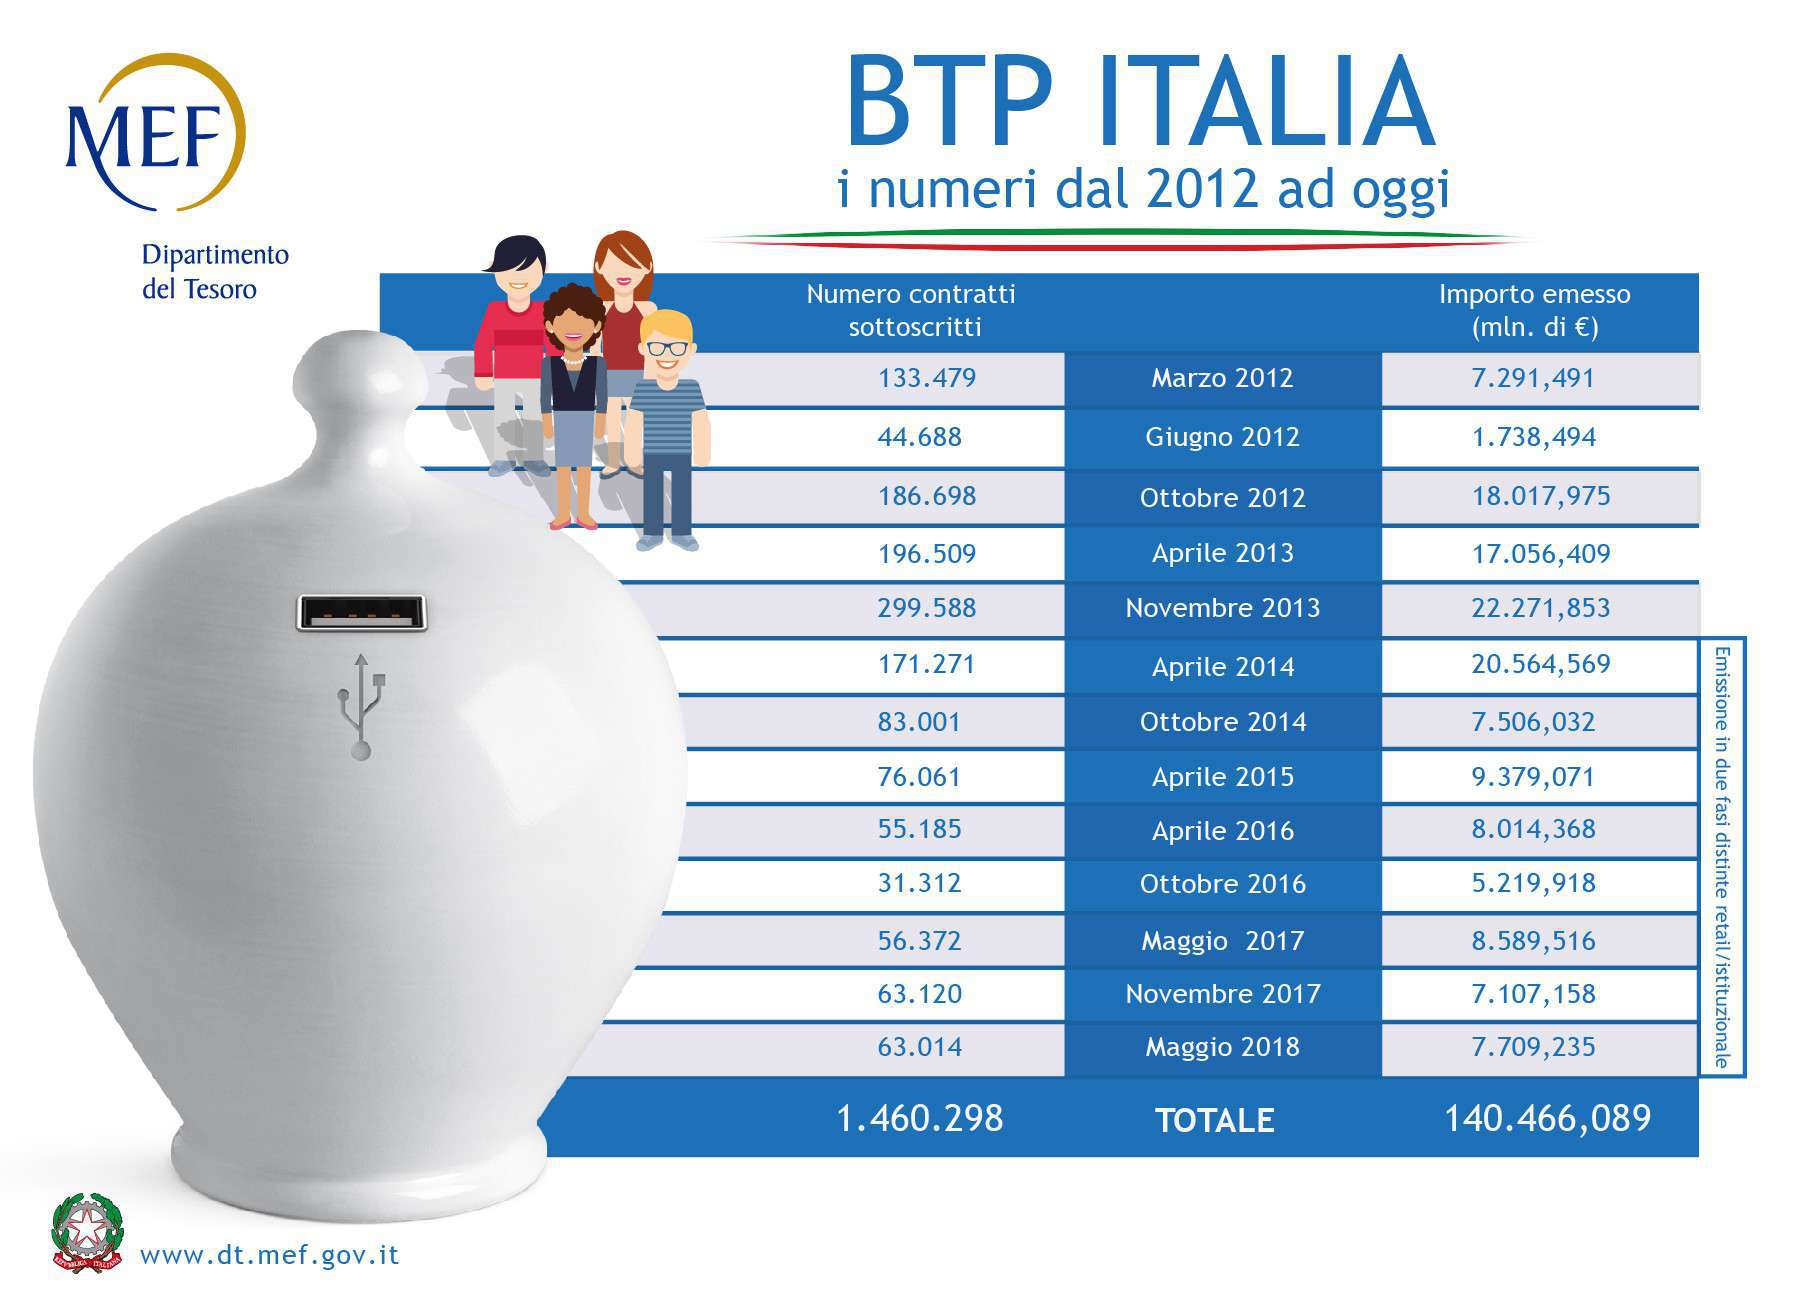 Btp Italy internal photo